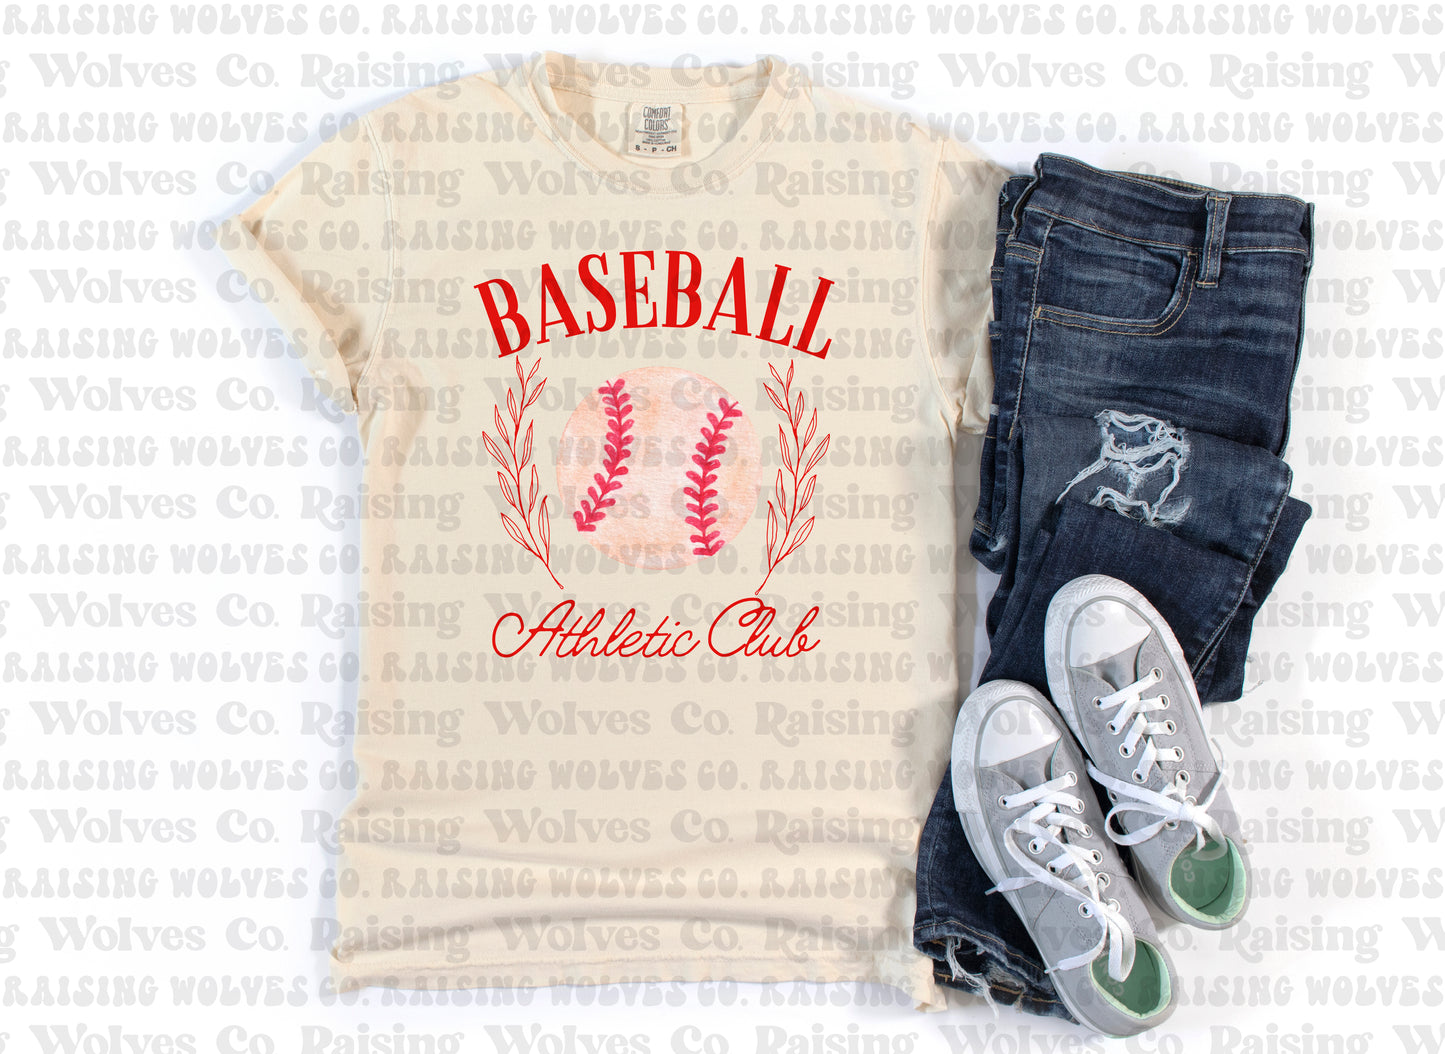 Baseball Athletic Club